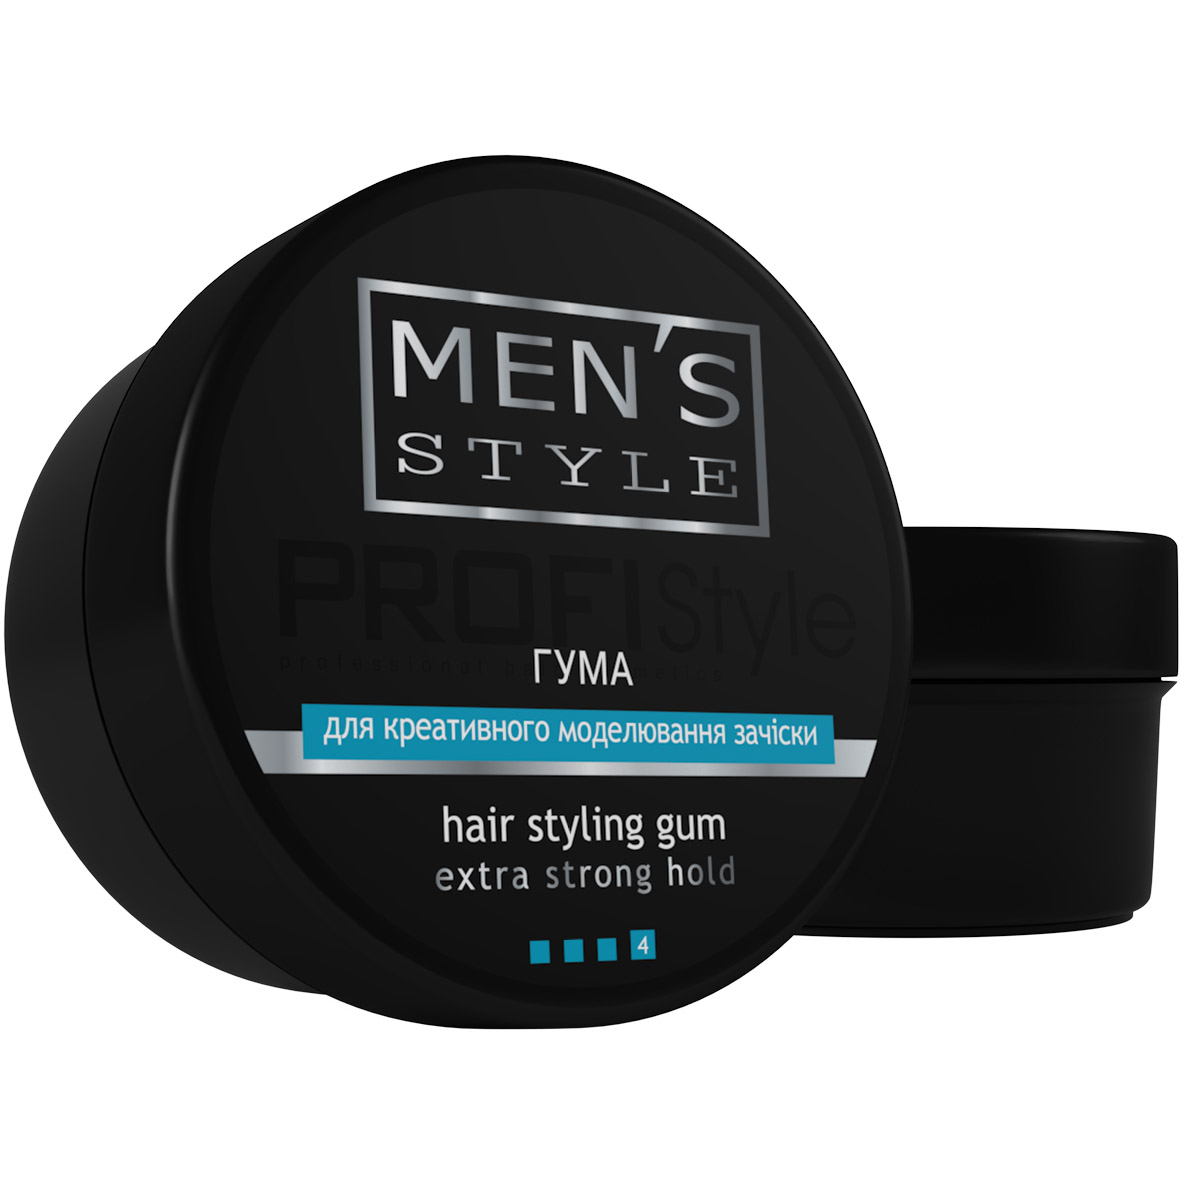 Гума для моделювання зачіски ProfiStyle Men's Style Hair Styling Gum Extra Strong Hold 80 мл - фото 1